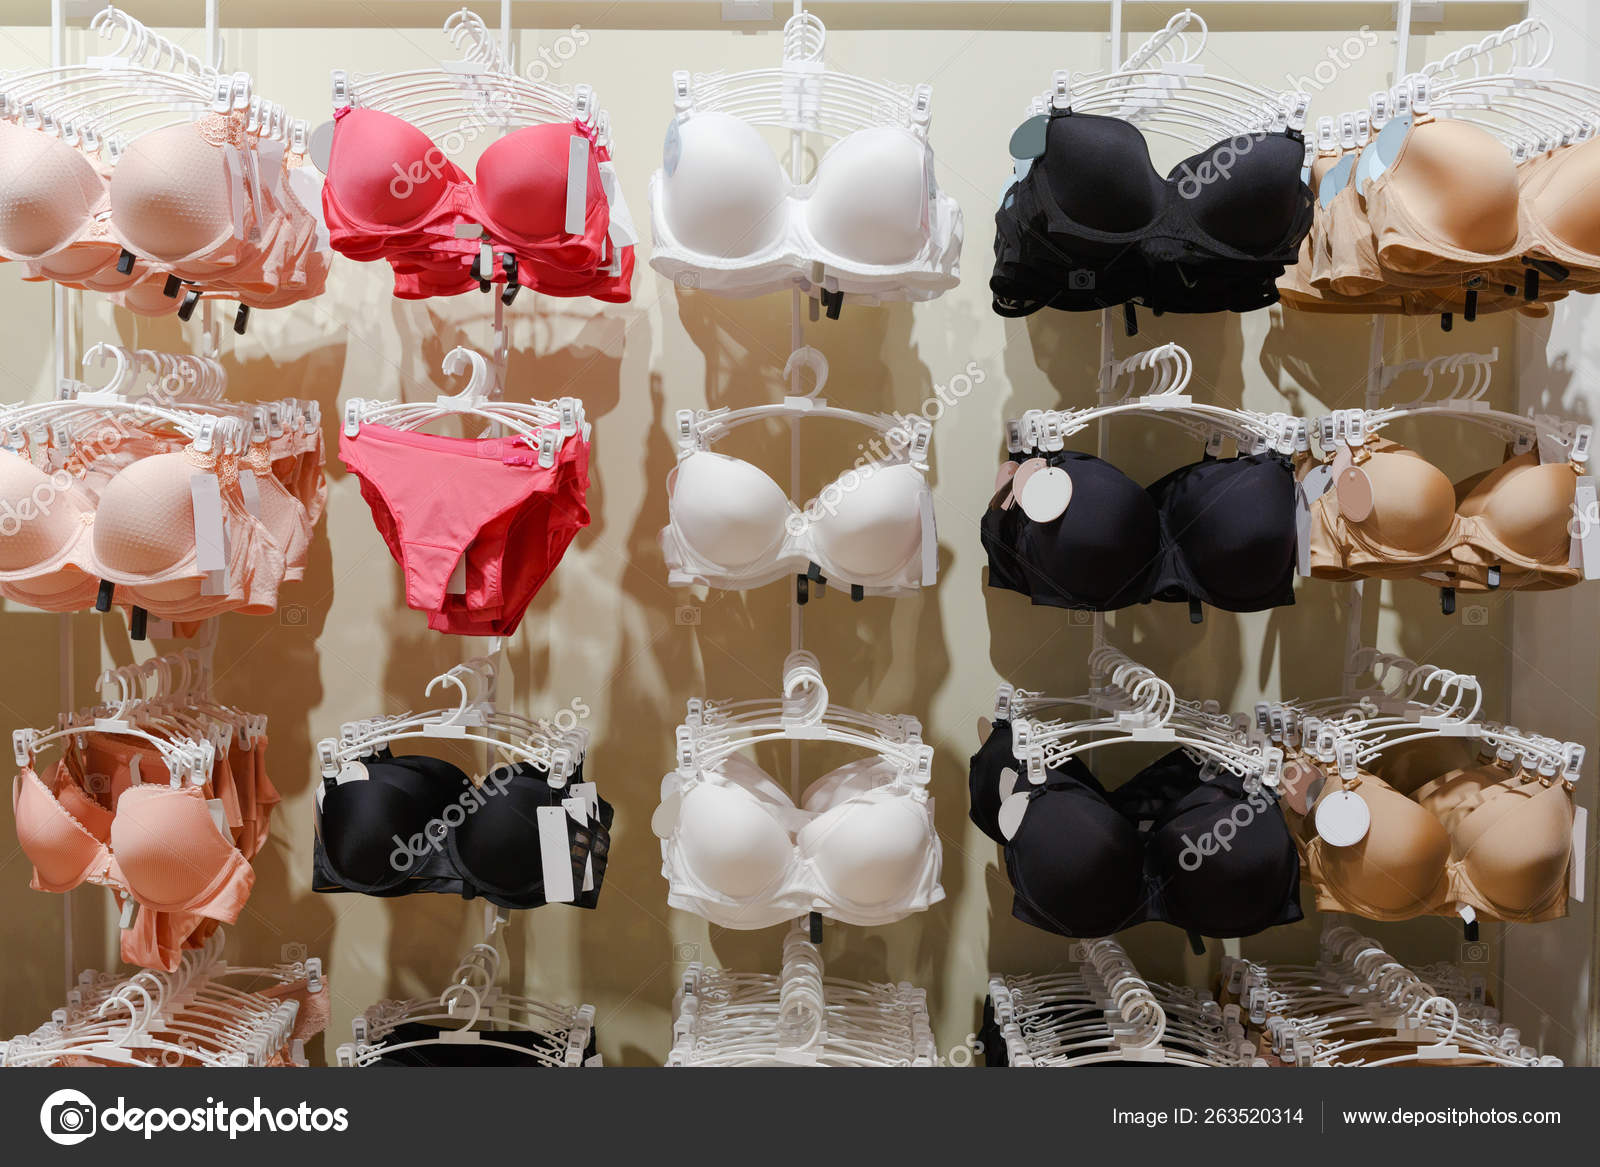 https://st4.depositphotos.com/1426049/26352/i/1600/depositphotos_263520314-stock-photo-shop-woman-underwear-clothes-bra.jpg